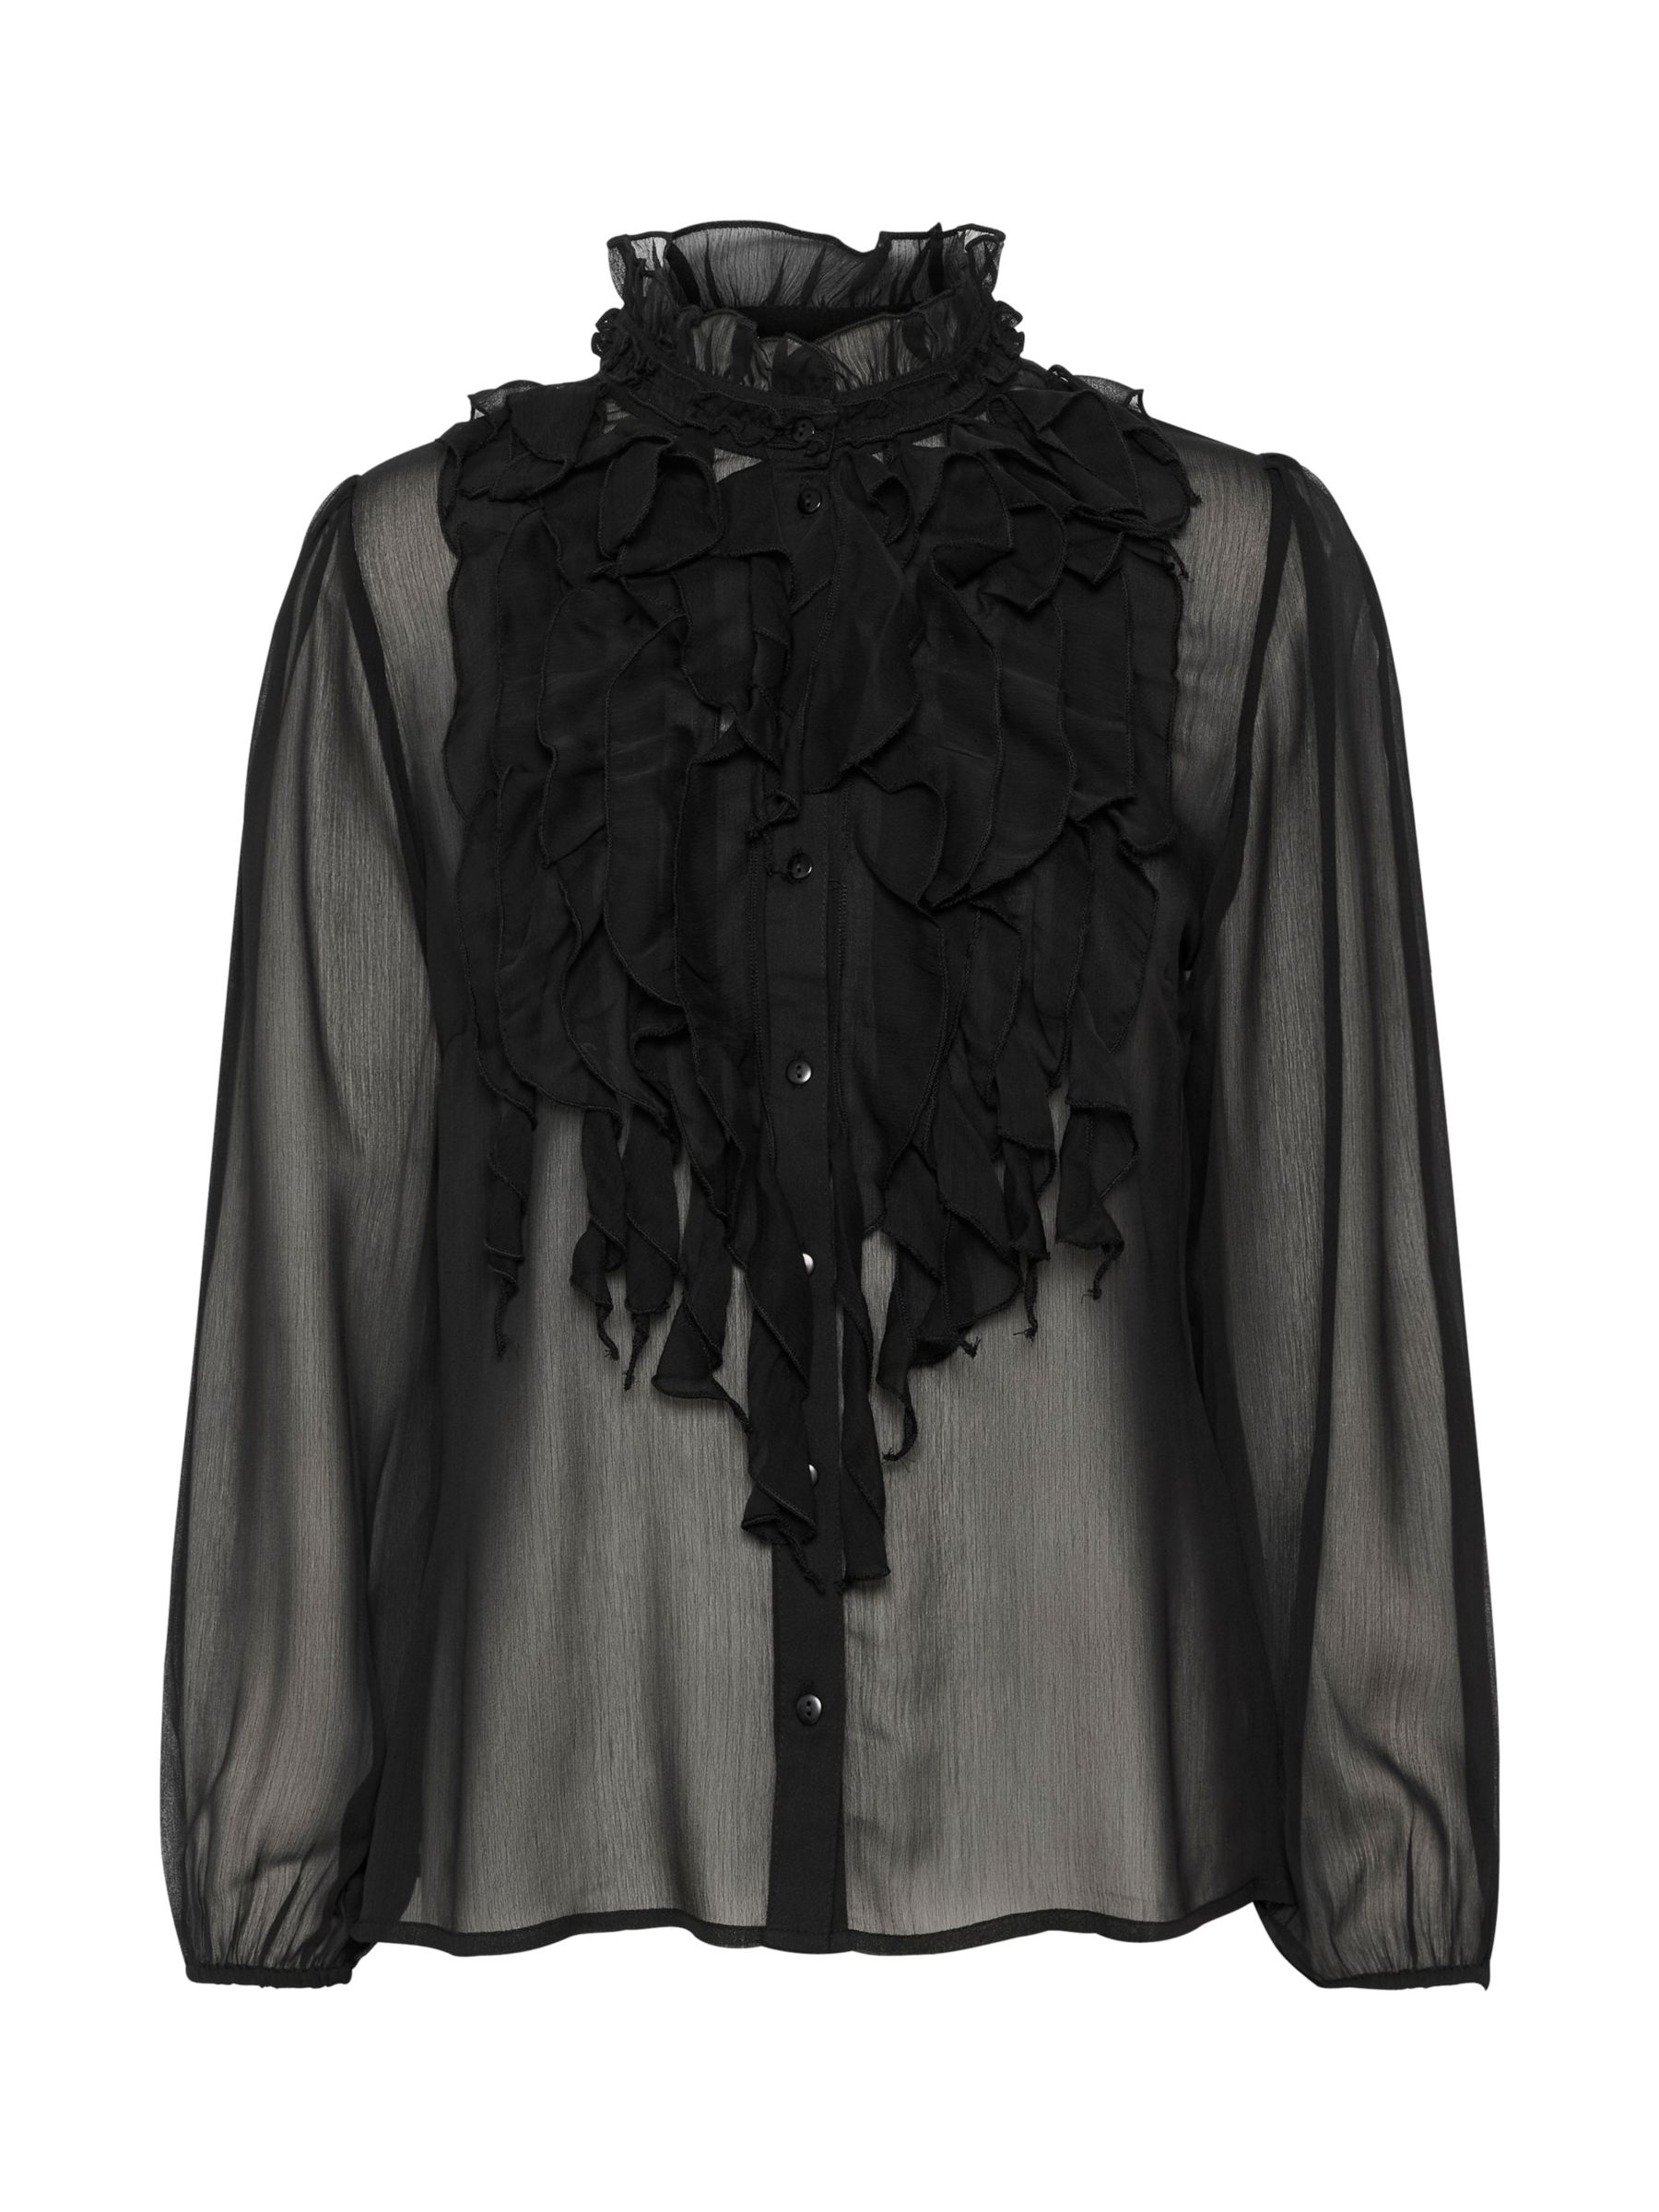 Saint Tropez Lija Chiffon Ruffle Shirt, Black at John Lewis & Partners